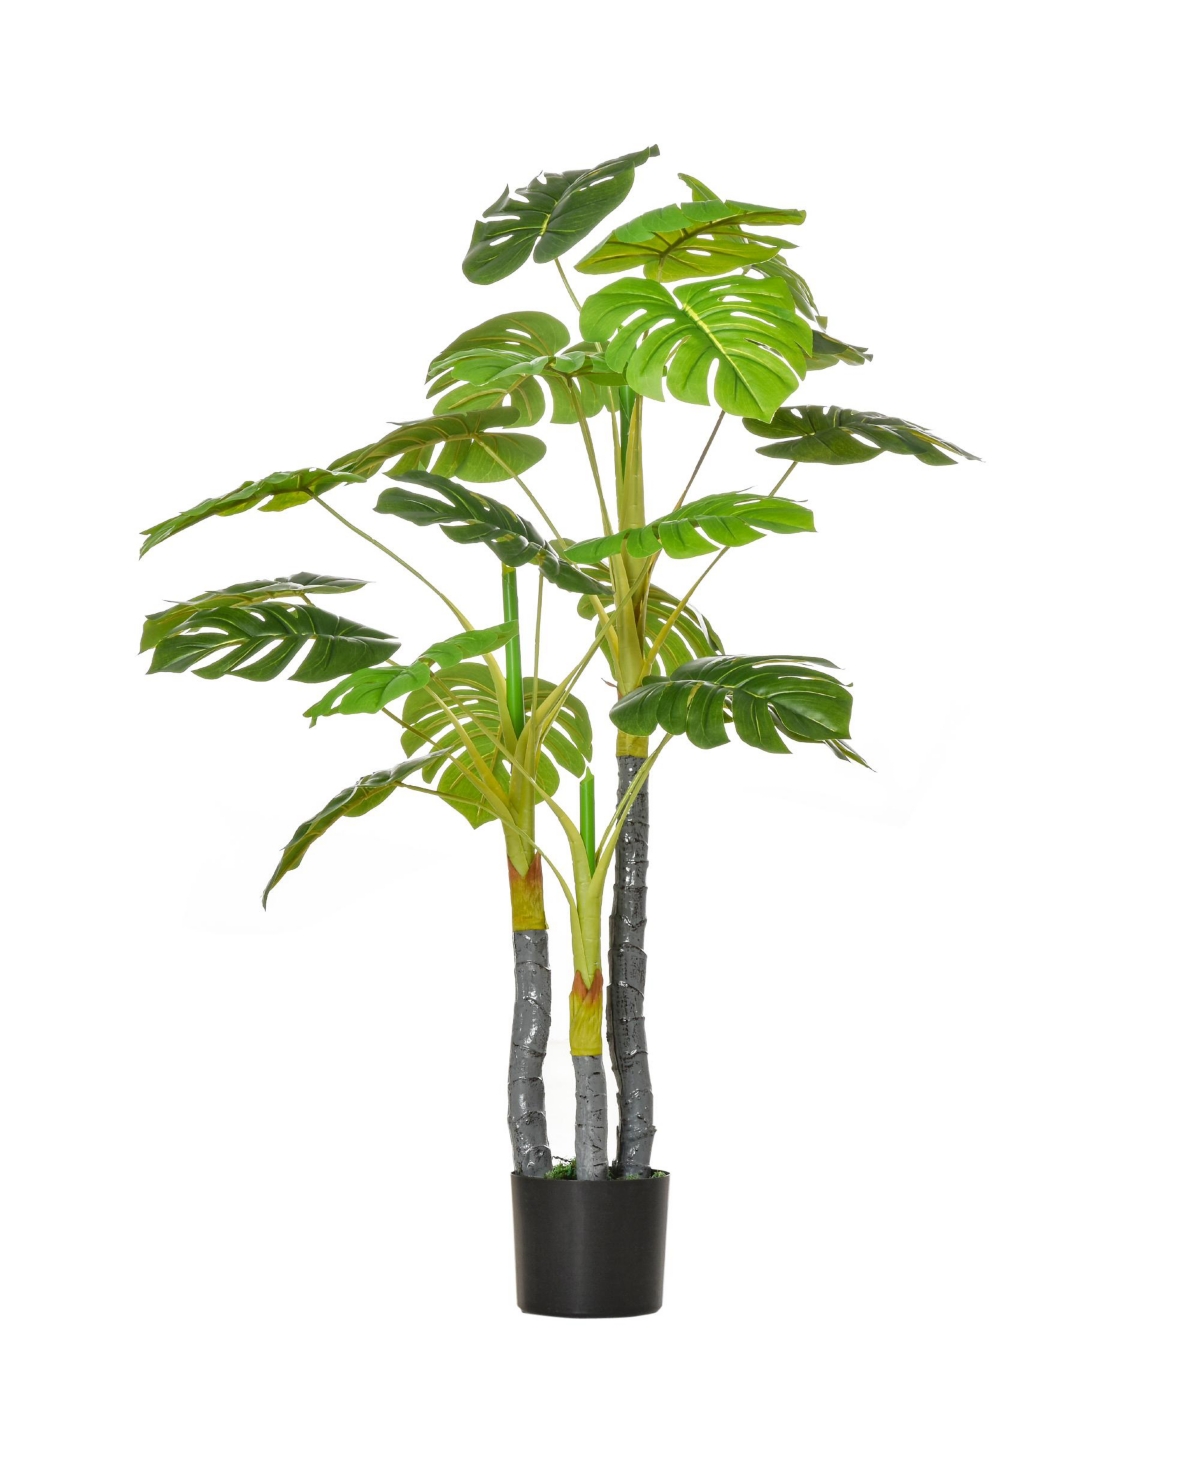 4' Artificial Monstera Tree Fake Plant in Pot Indoor Outdoor Decor - Green